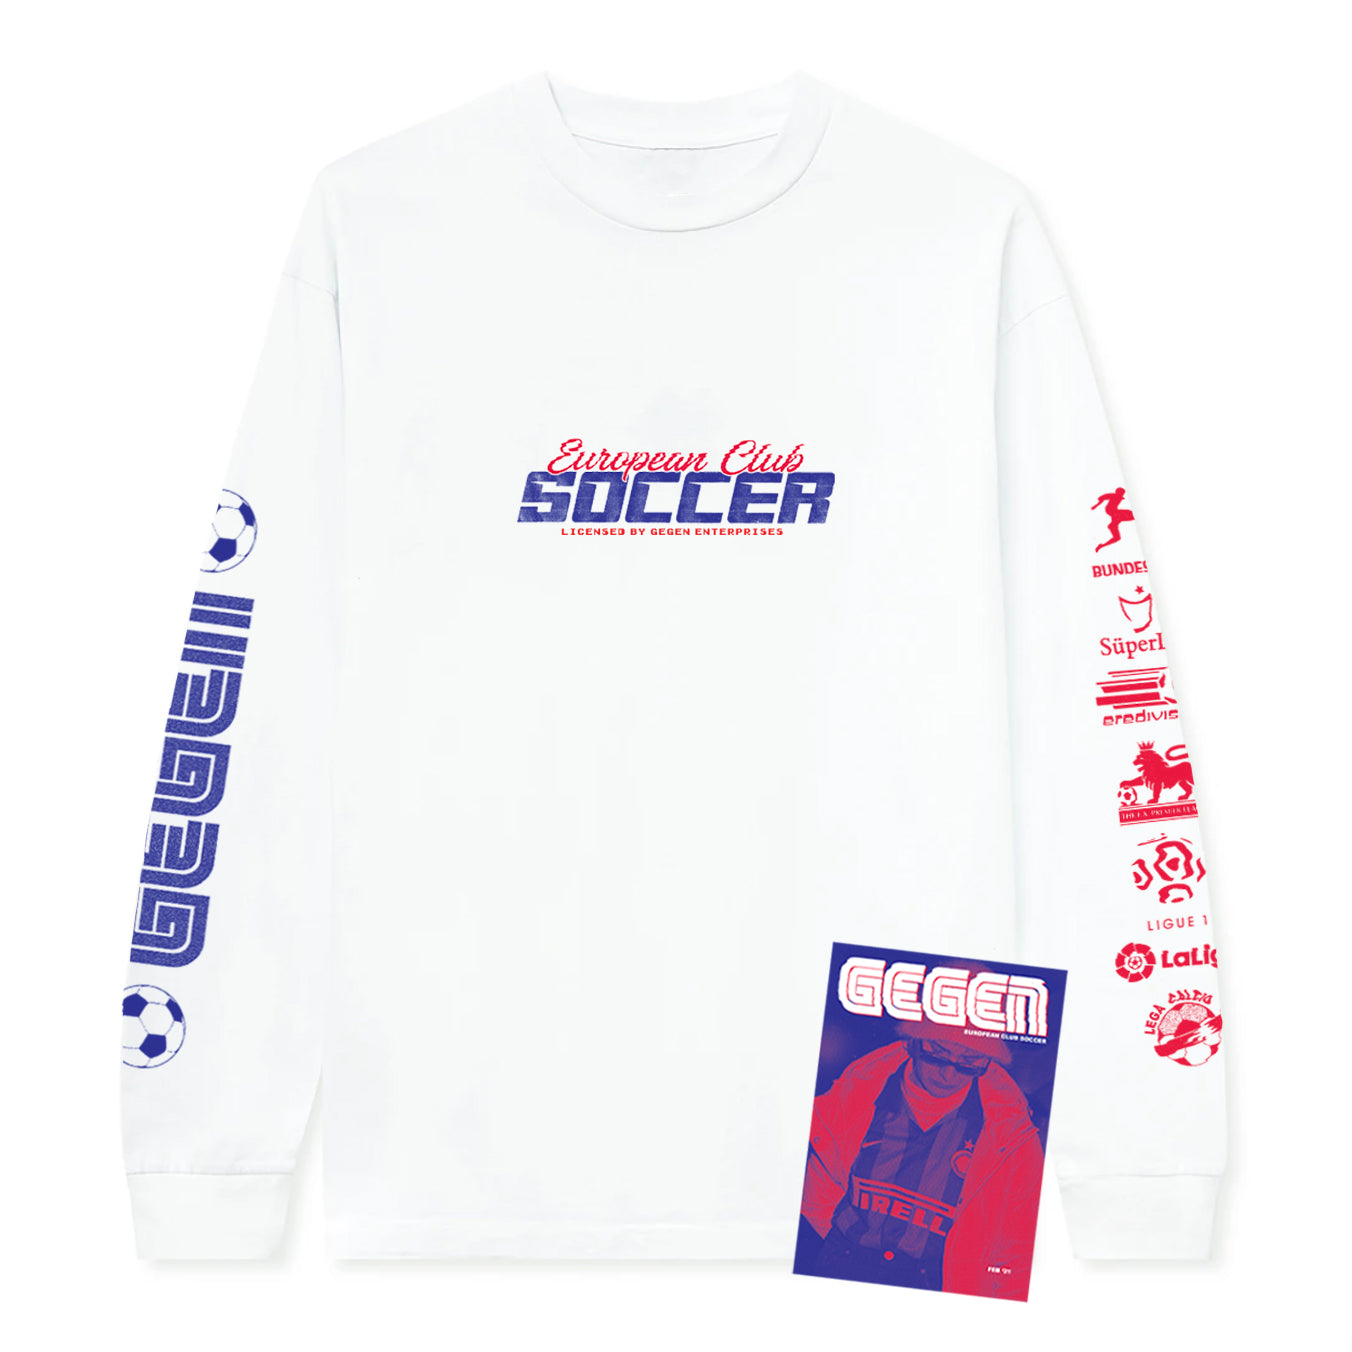 European Club Soccer / Long-Sleeve Shirt + Zine Bundle